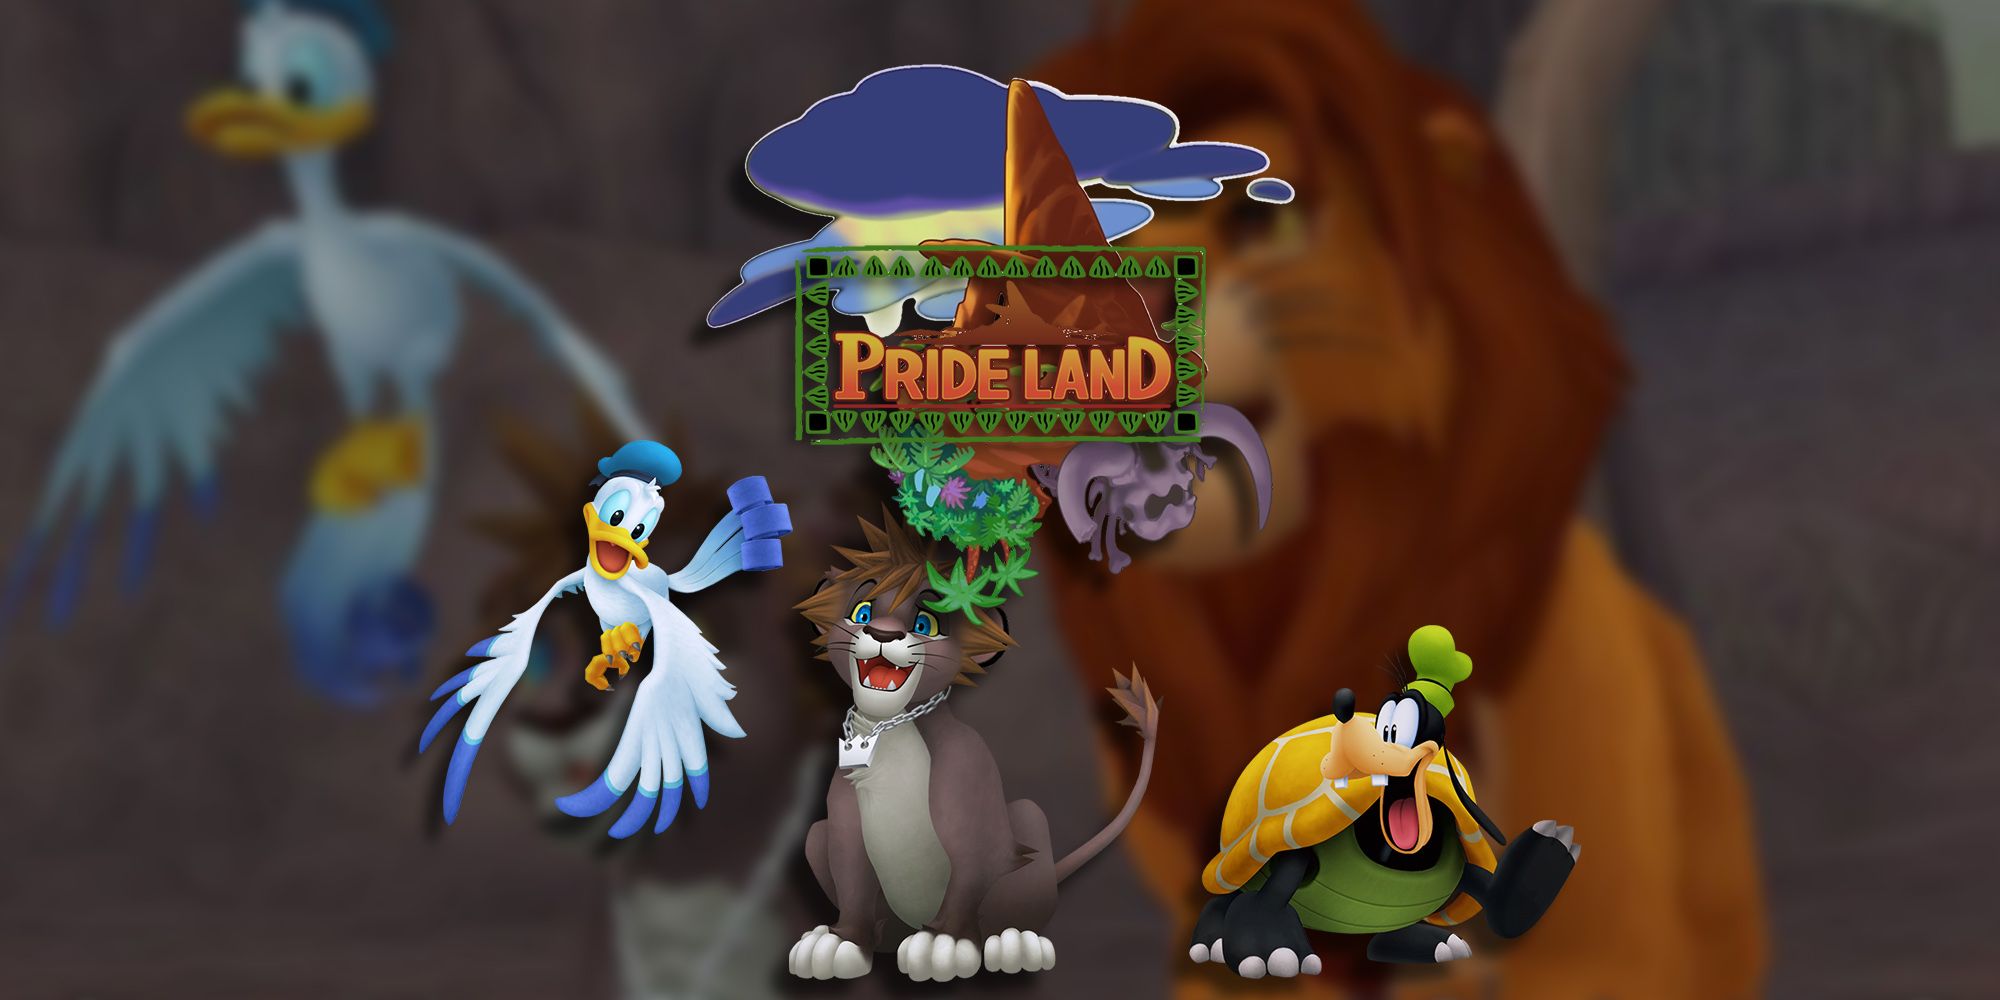 Pride Land in Kingdom Hearts 2